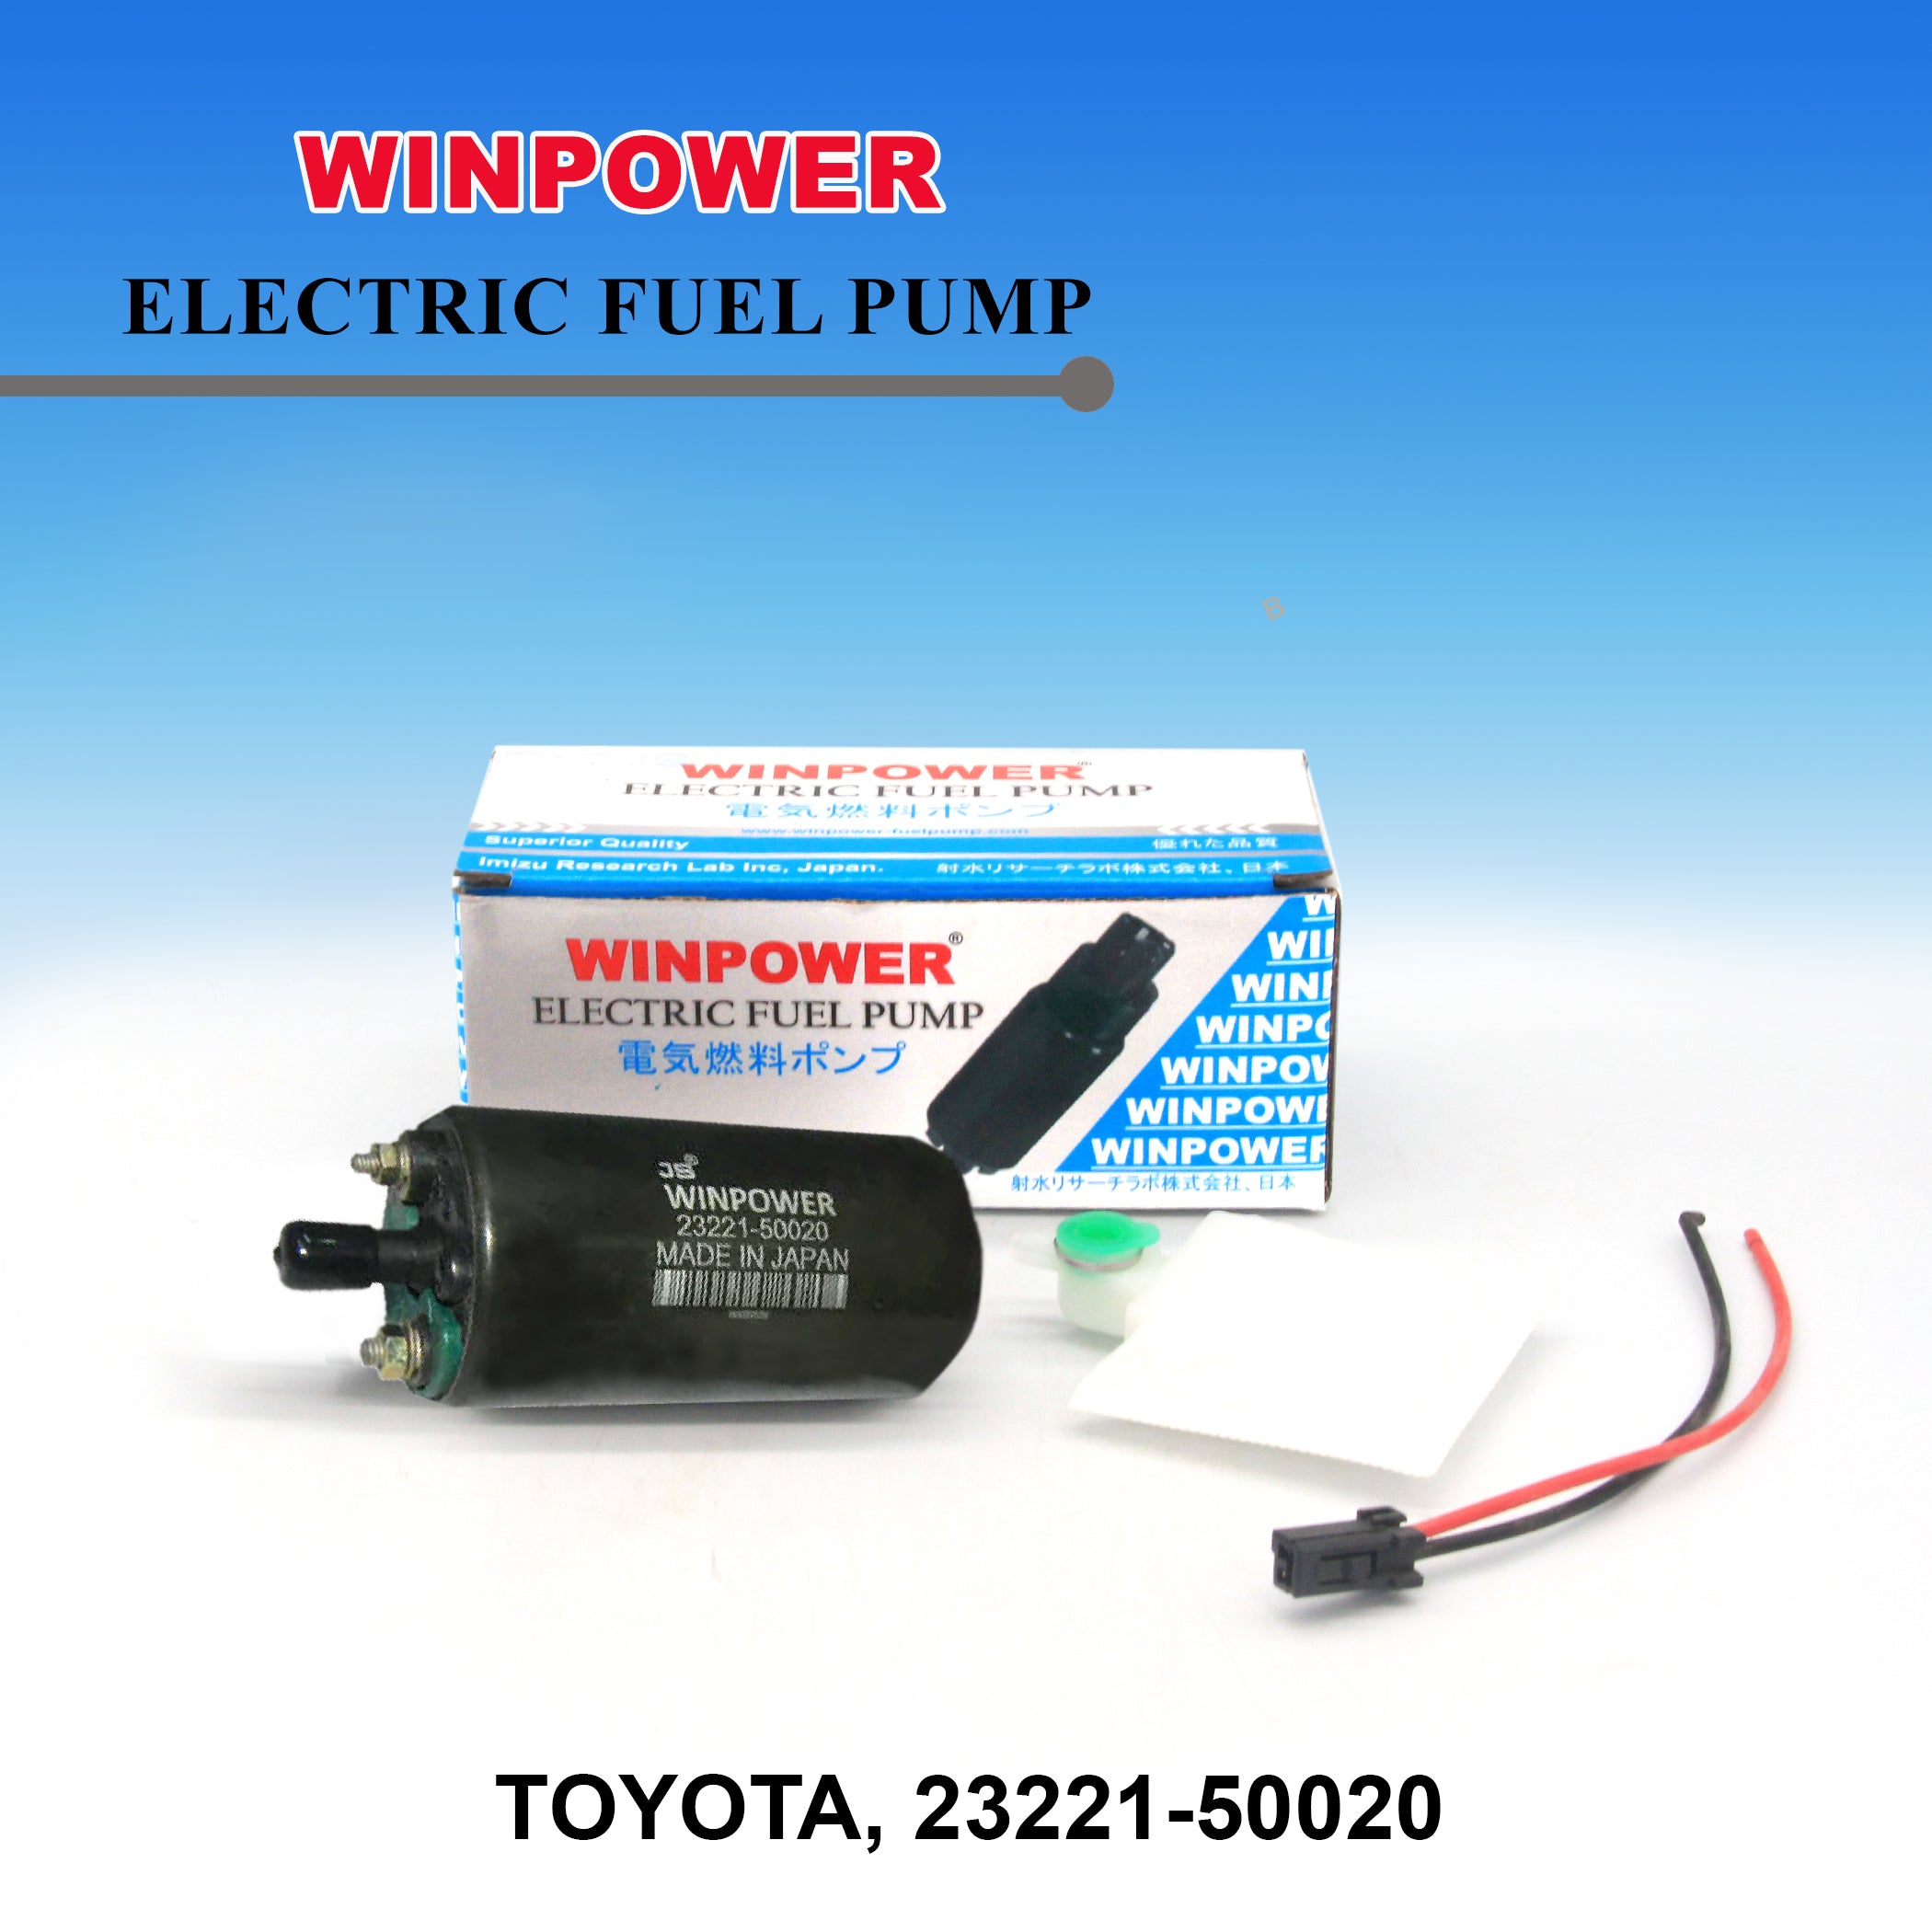 In-Tank Fuel Pump, WINPOWER, Big, 23221-50020 (000876)